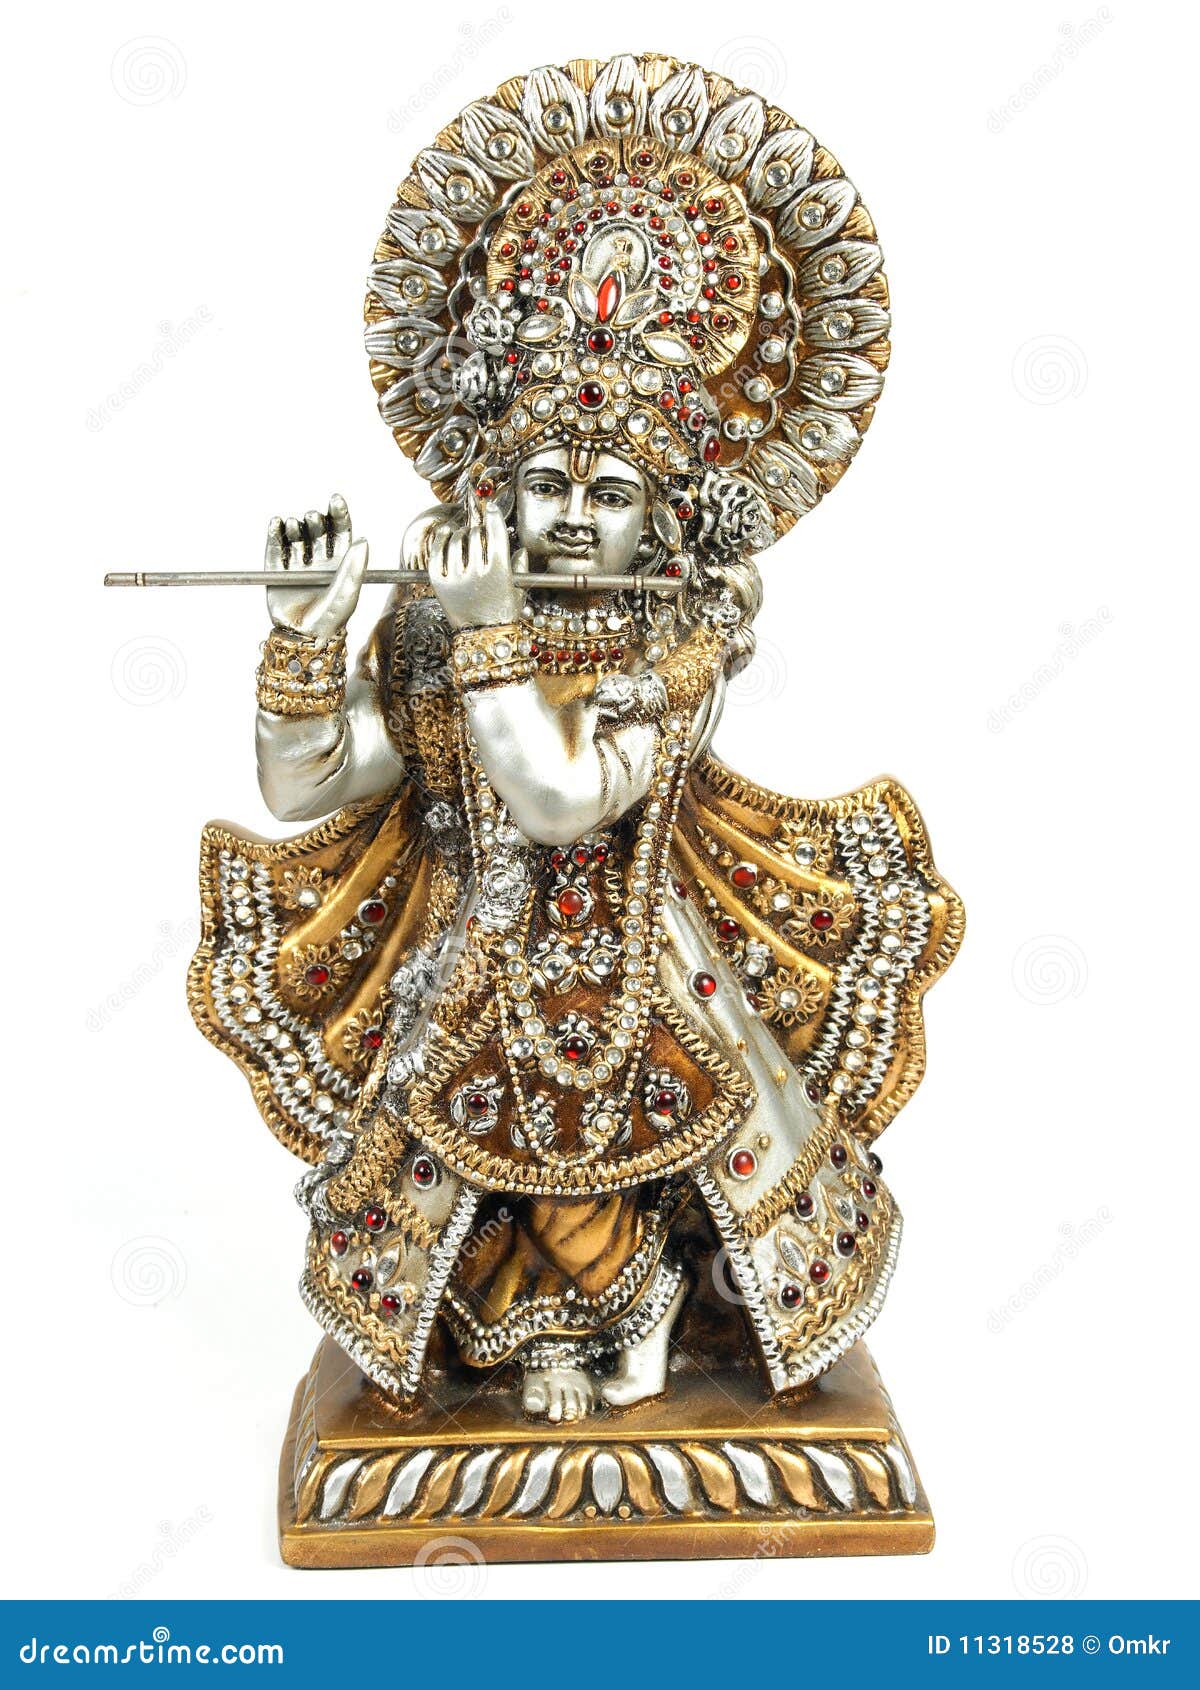 idol of lord krishna